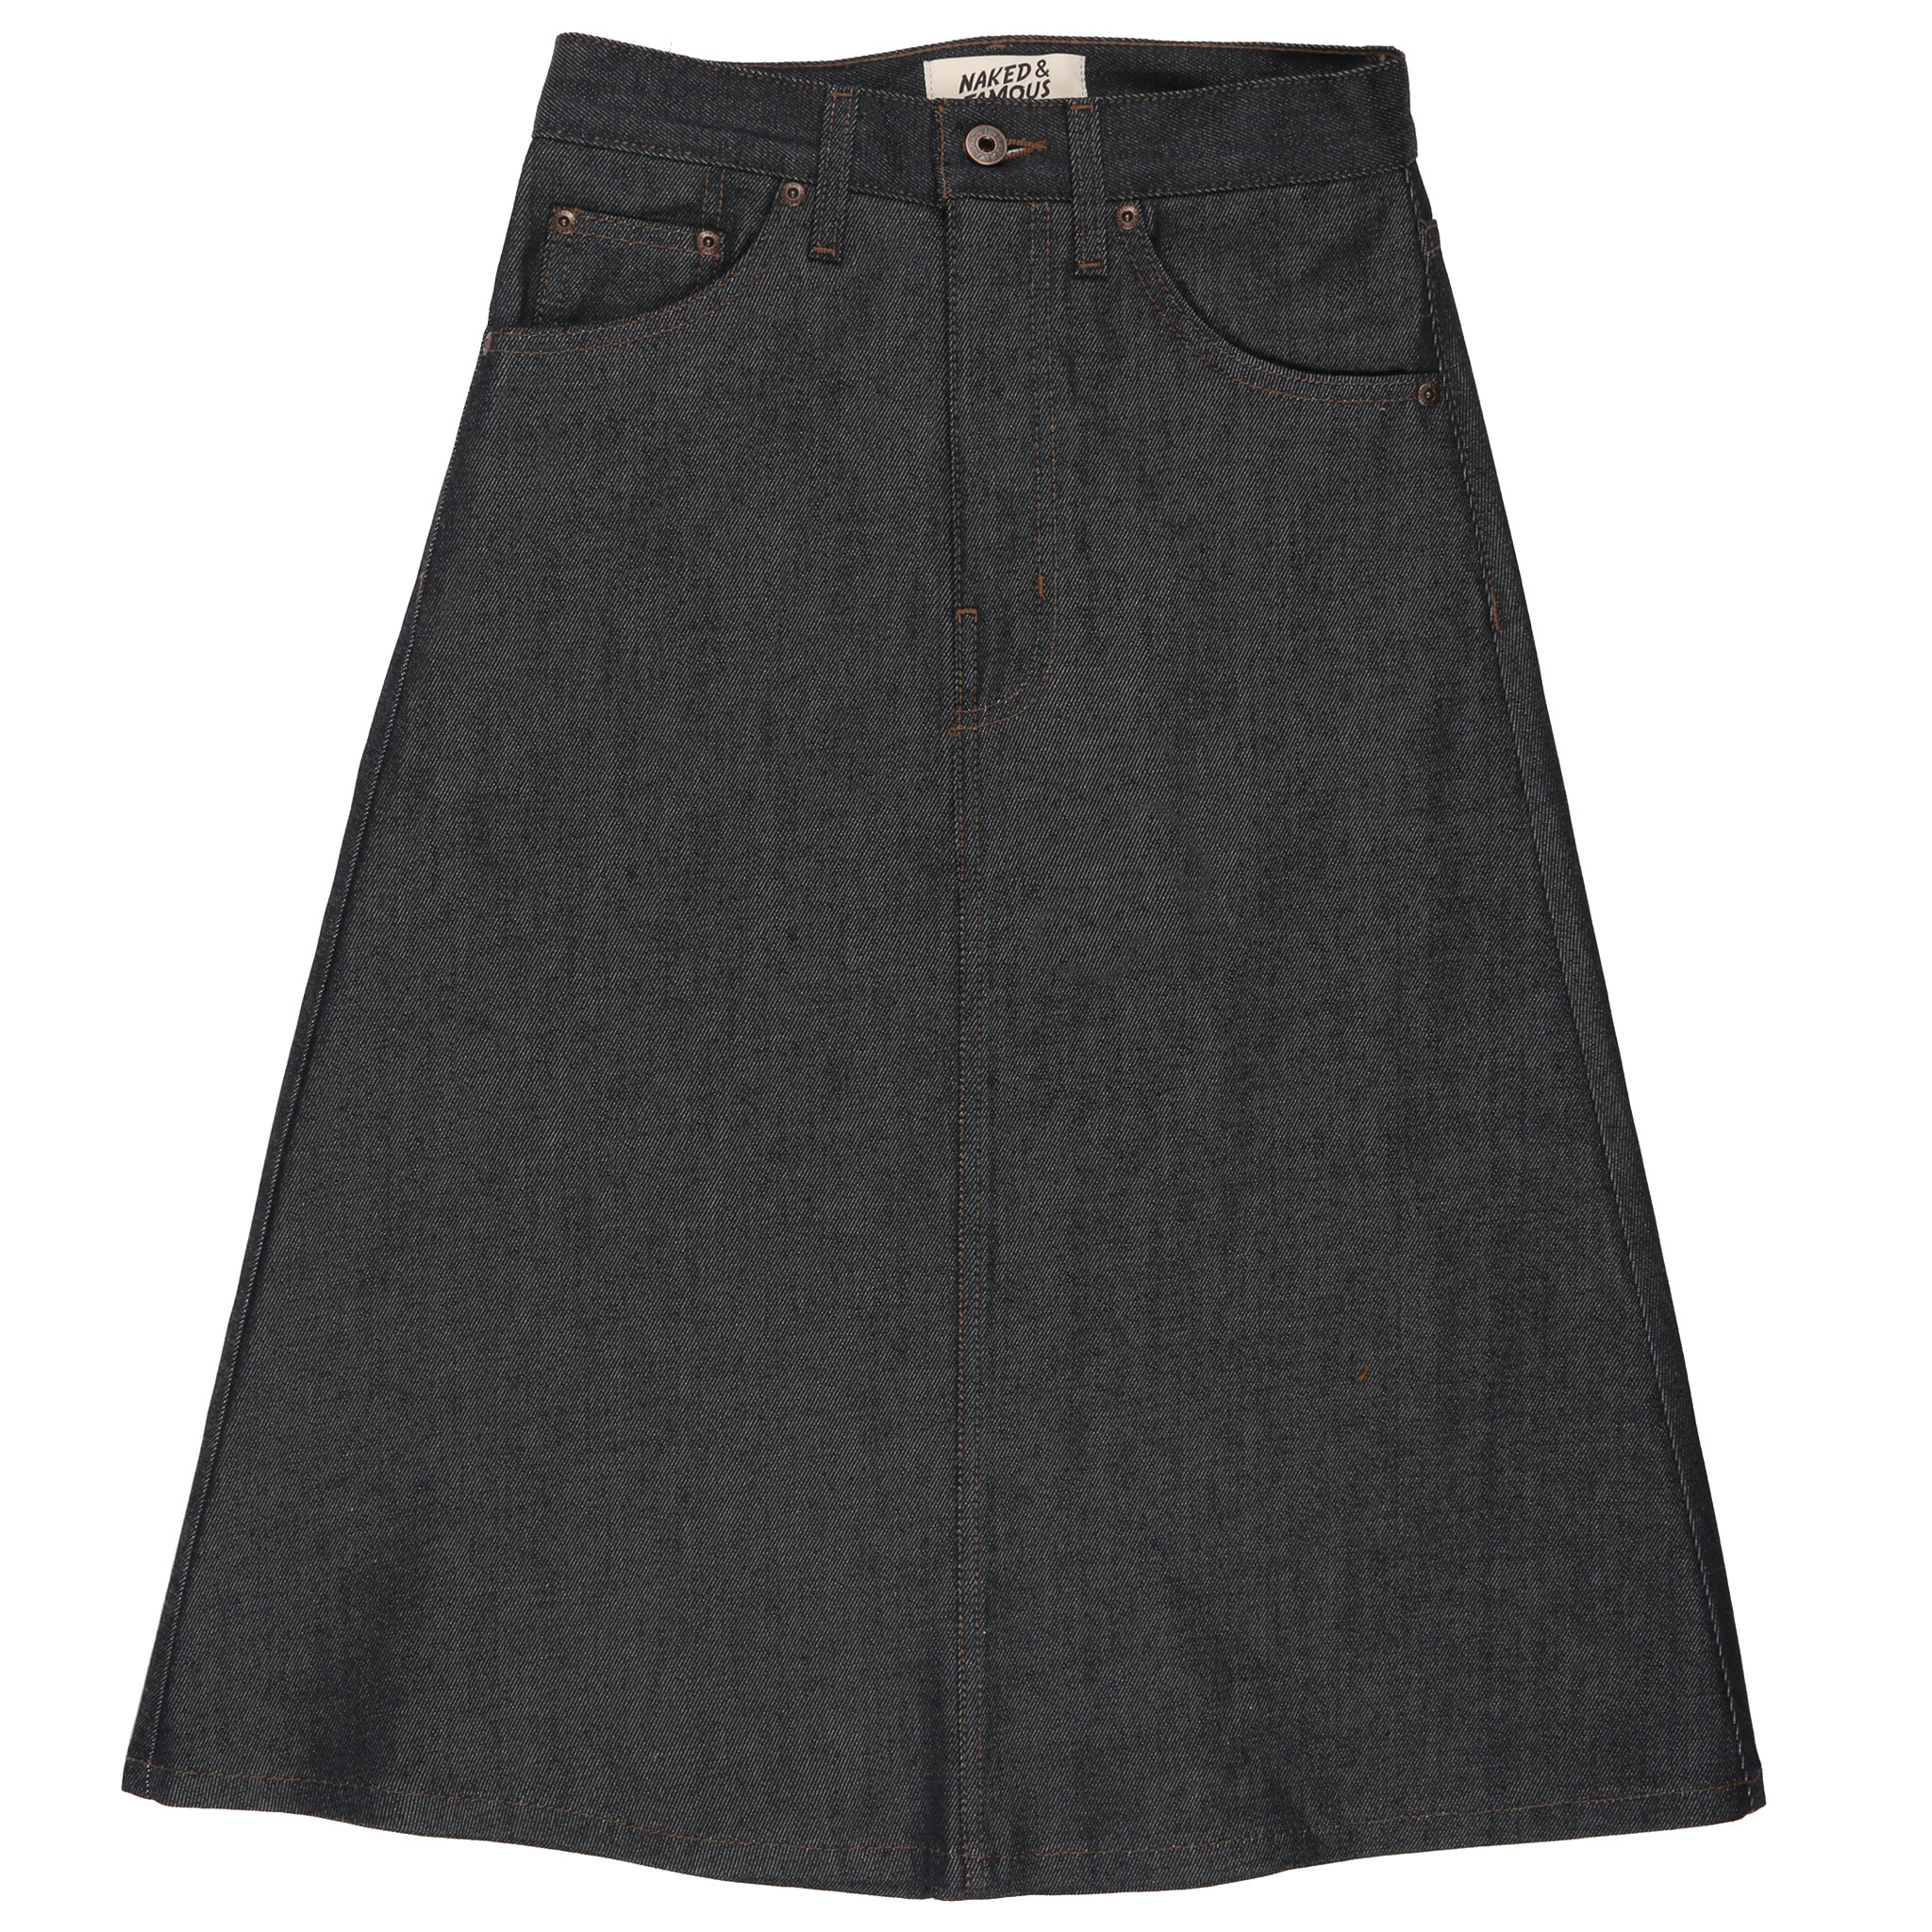  Women’s Denim Skirt Front View 